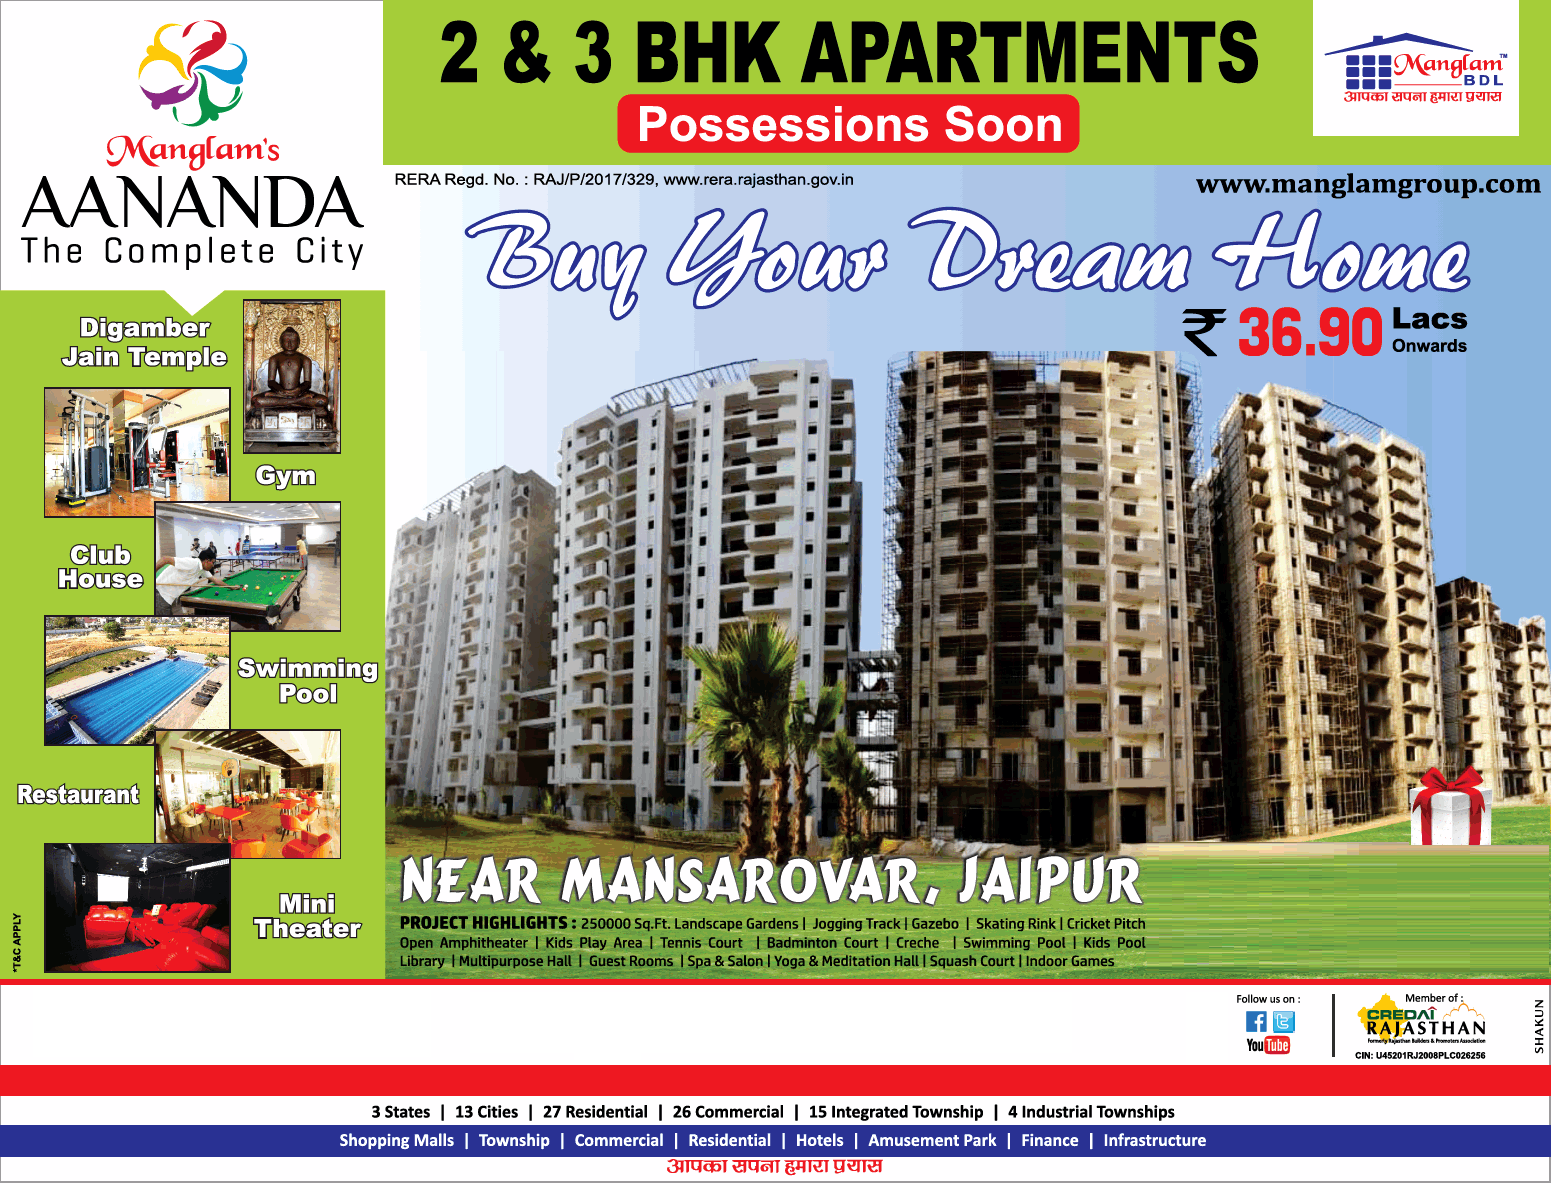 Book 2 & 3 bhk apartments at Rs. 36.90 lakhs at Manglam Aananda in Jaipur